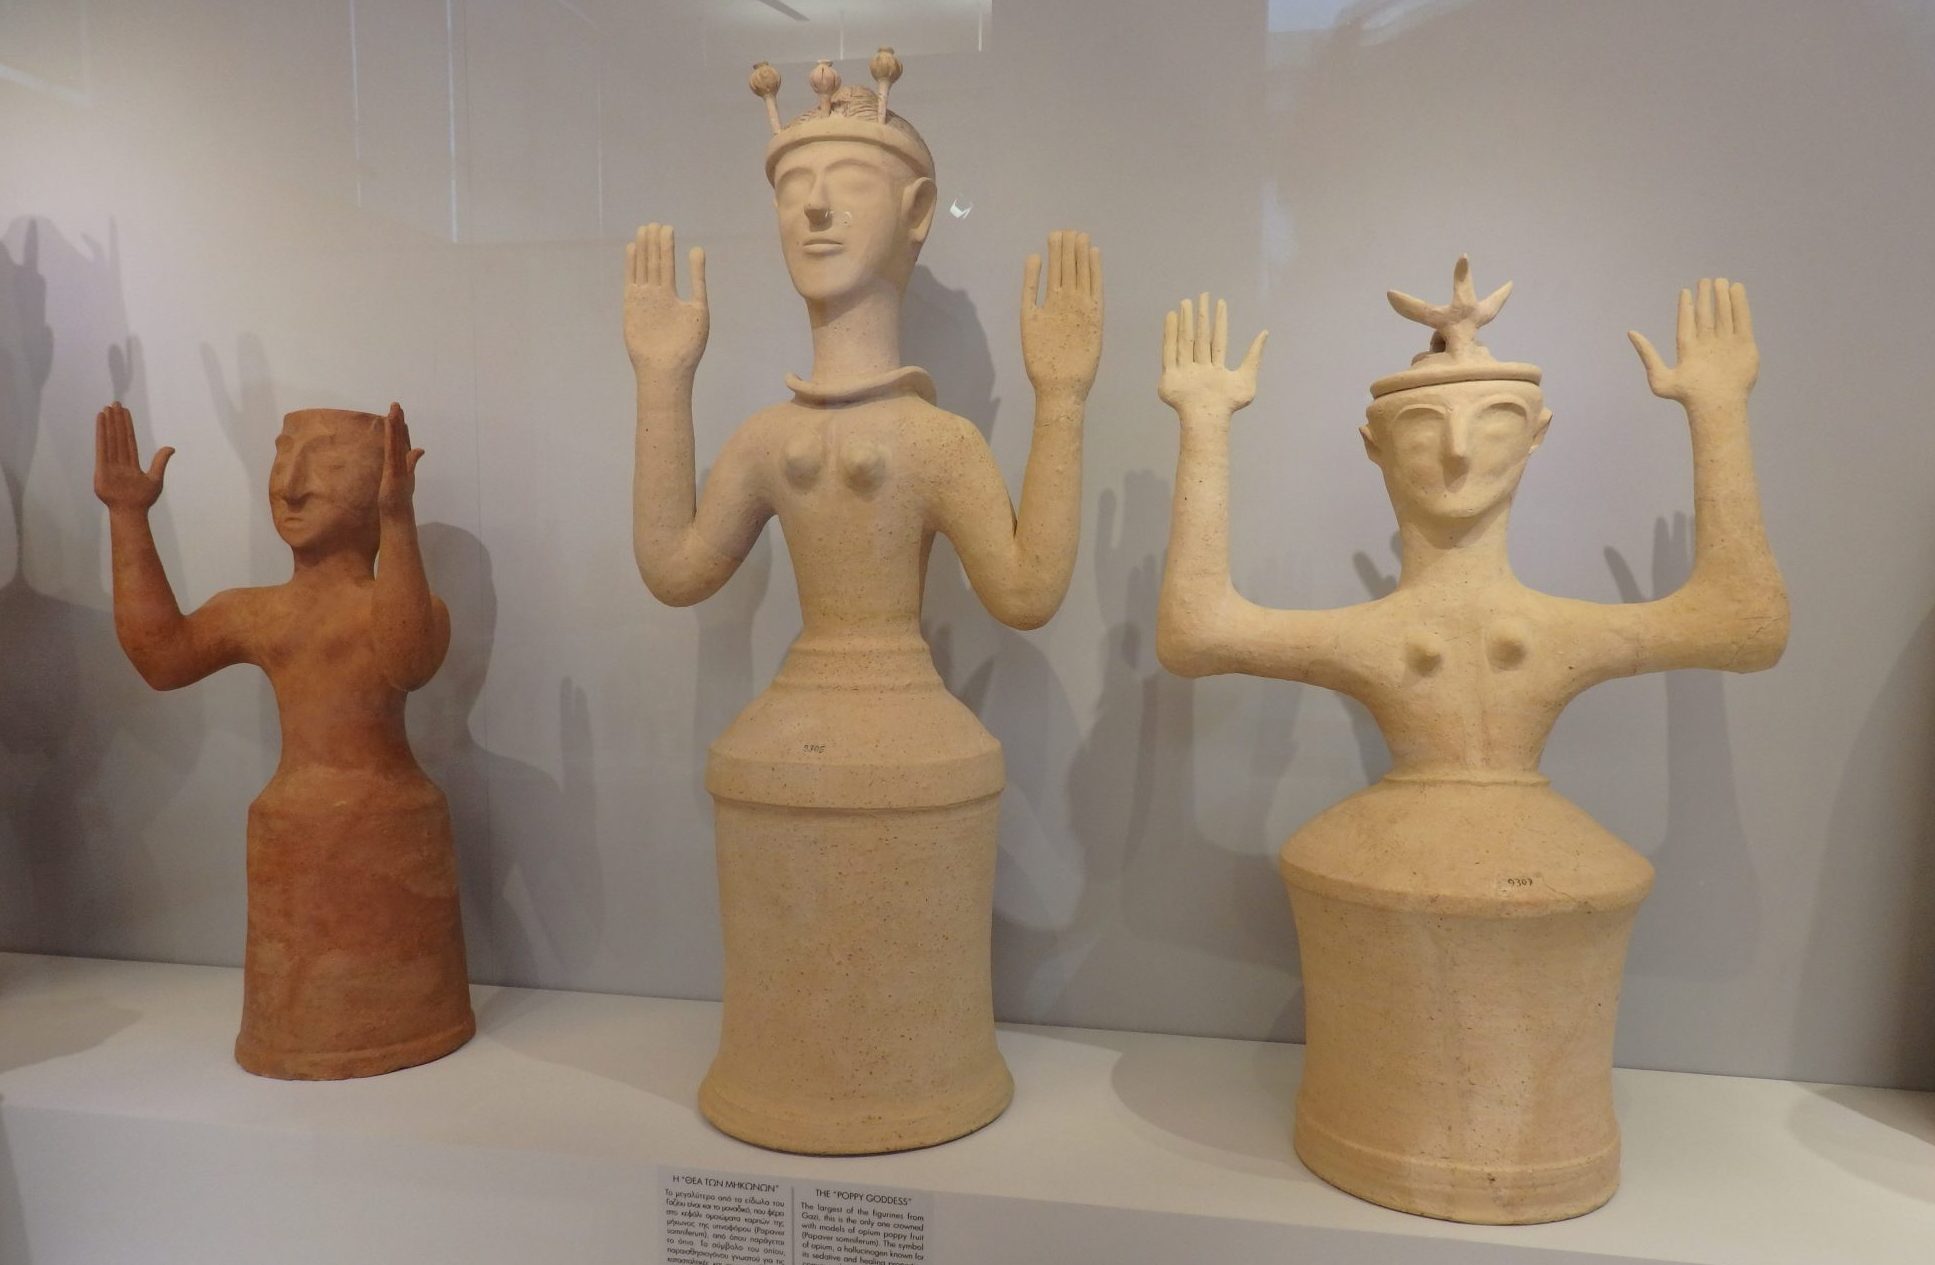 Goddess figurines from 1300-1200 BCE.